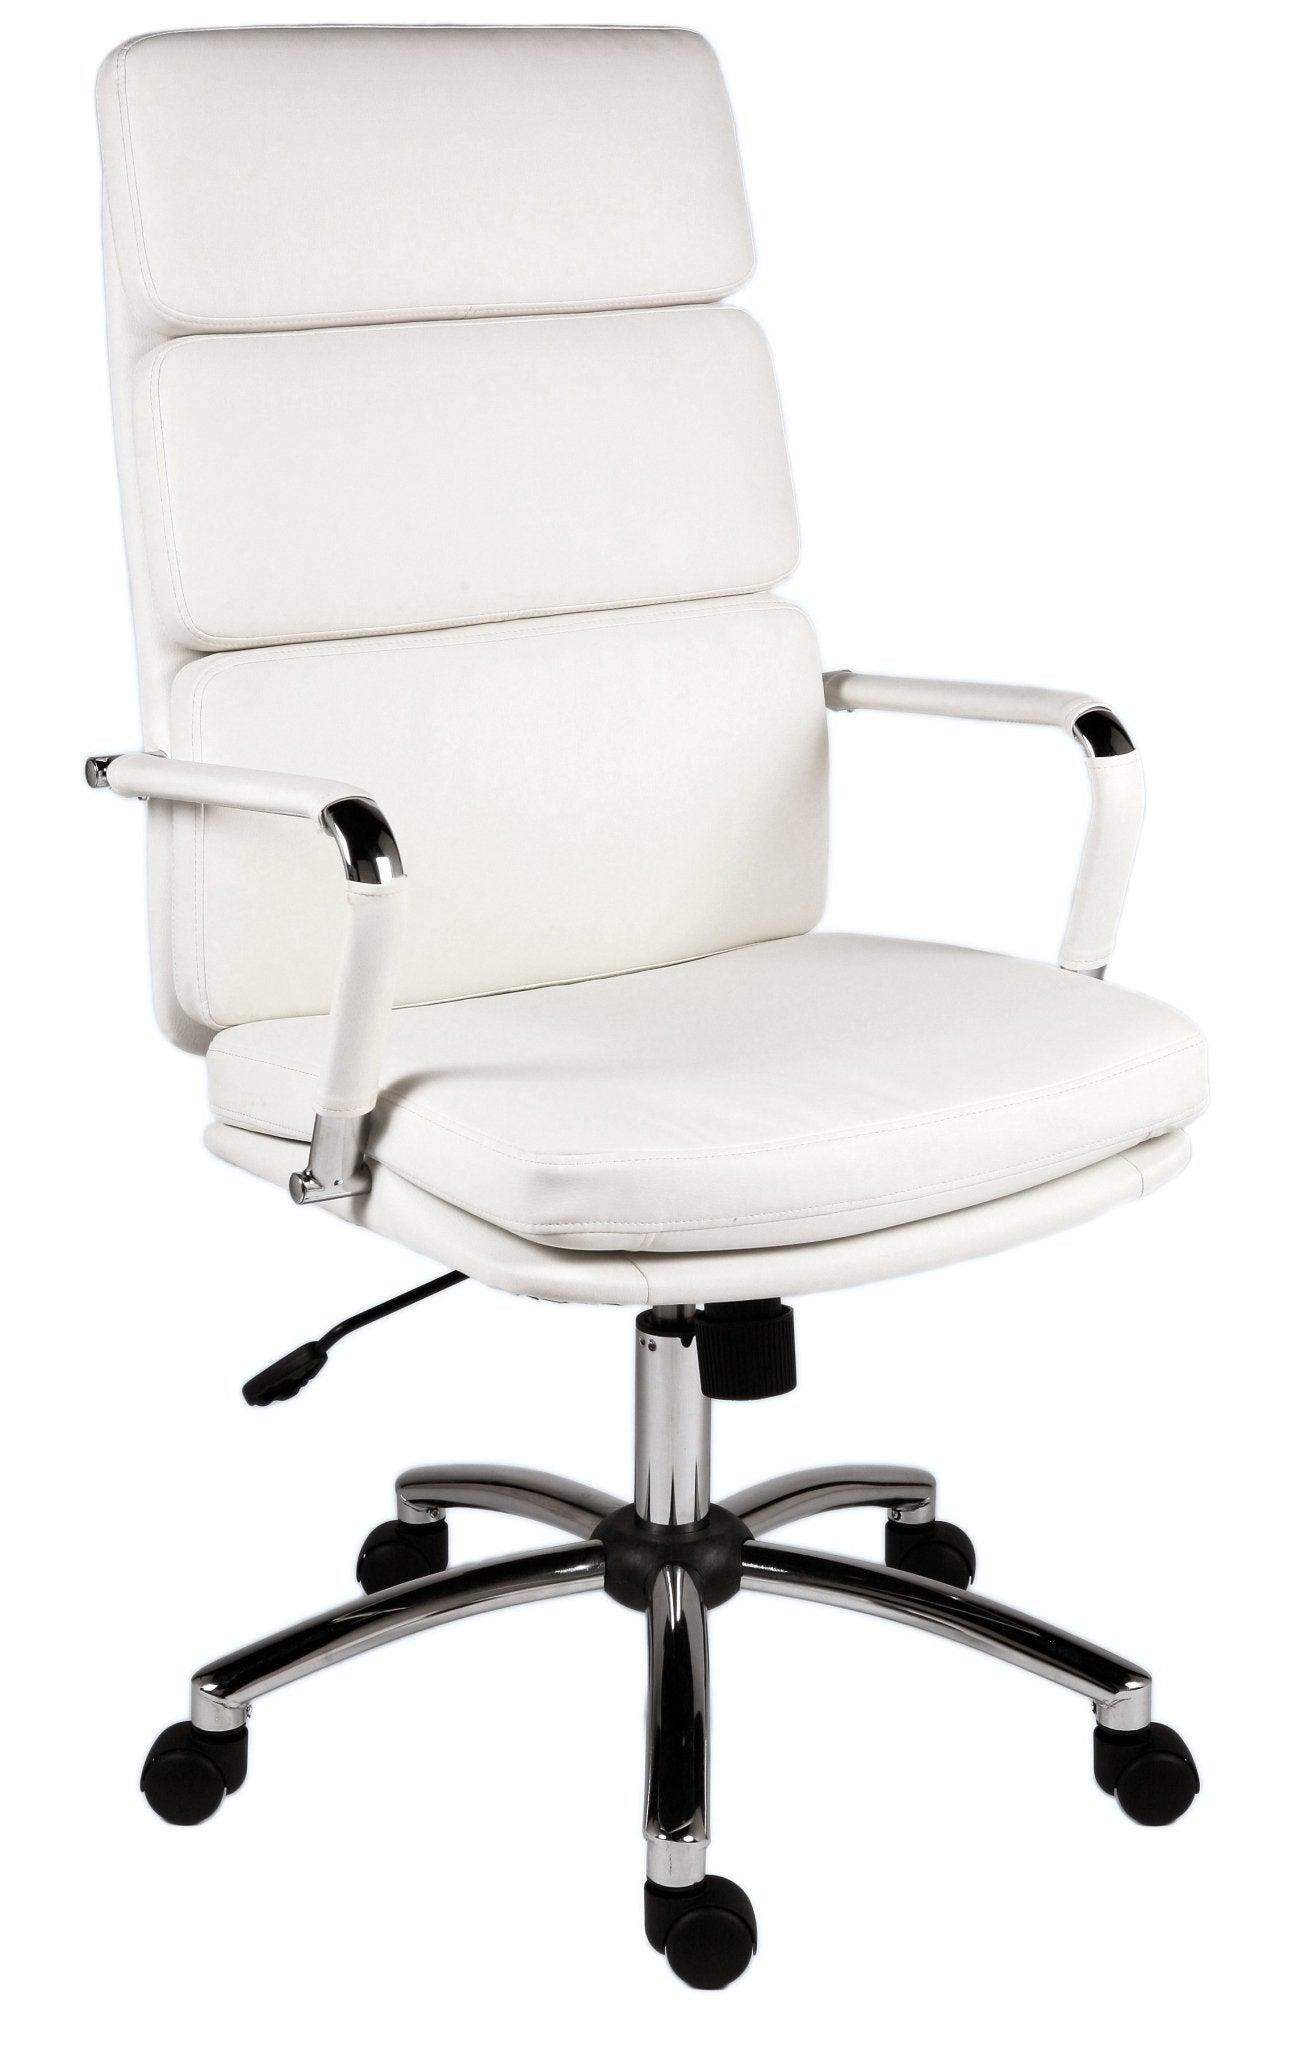 Deco executive office chair (white) - crimblefest furniture - image 1